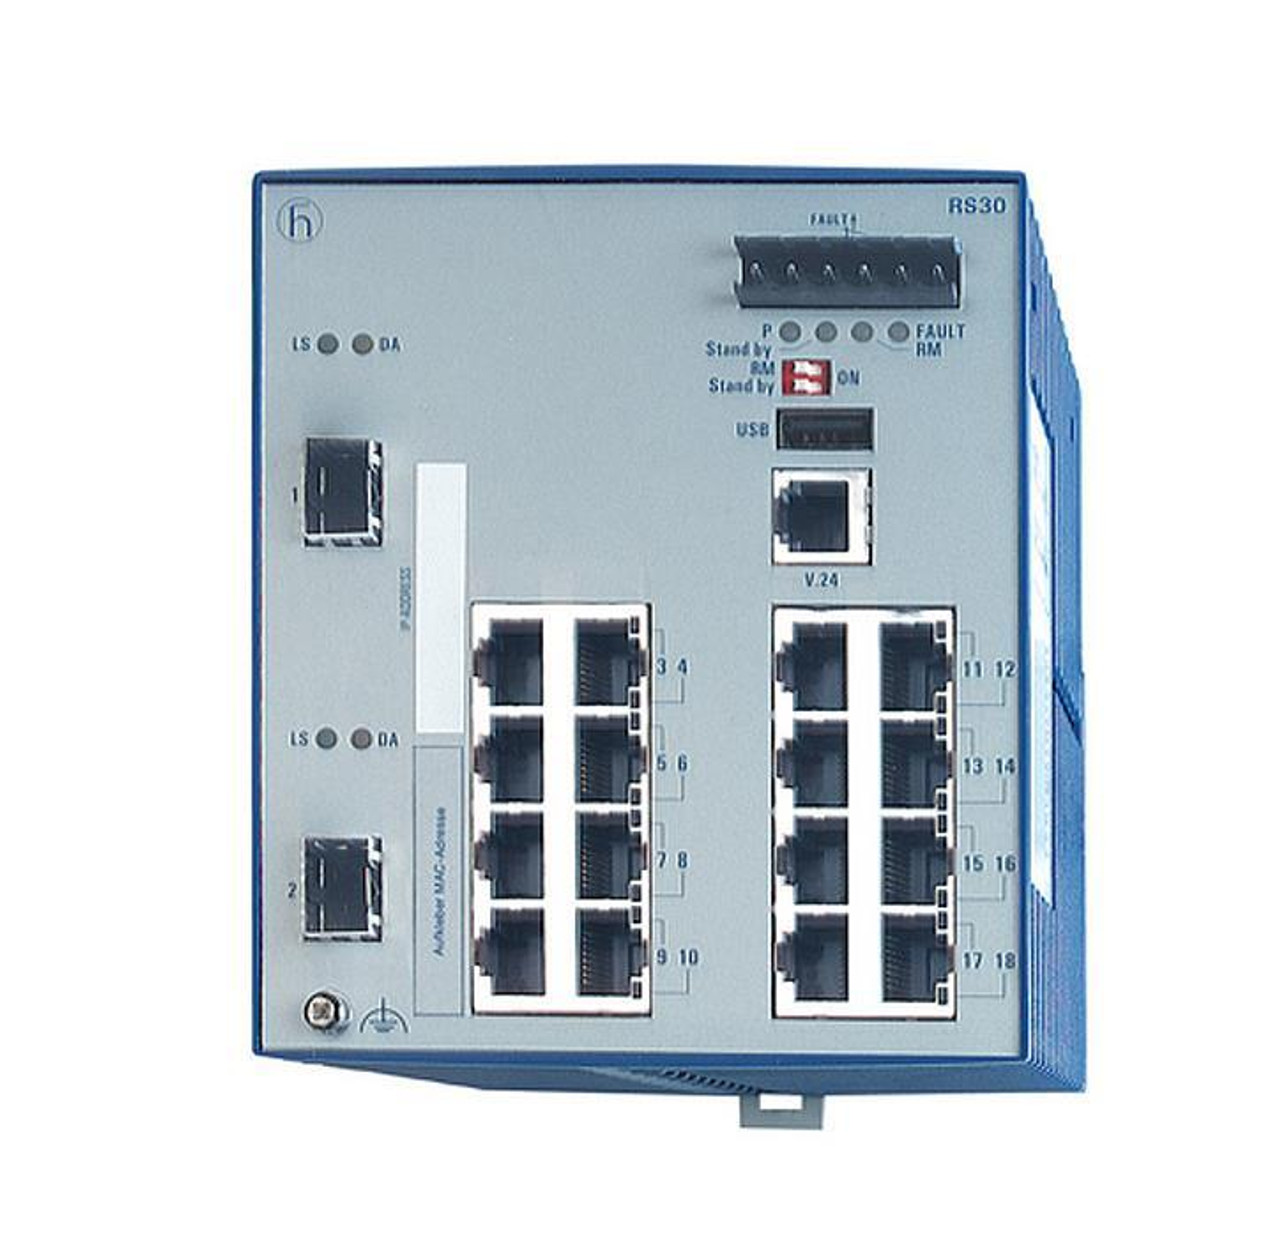 Hirschmann Compact OpenRail Gigabit / Fast Ethernet Switch 18 ports 16 x standard 10/100 BASE TX RJ45 2 Gigabit / Fast Ethernet Uplink SFP ports